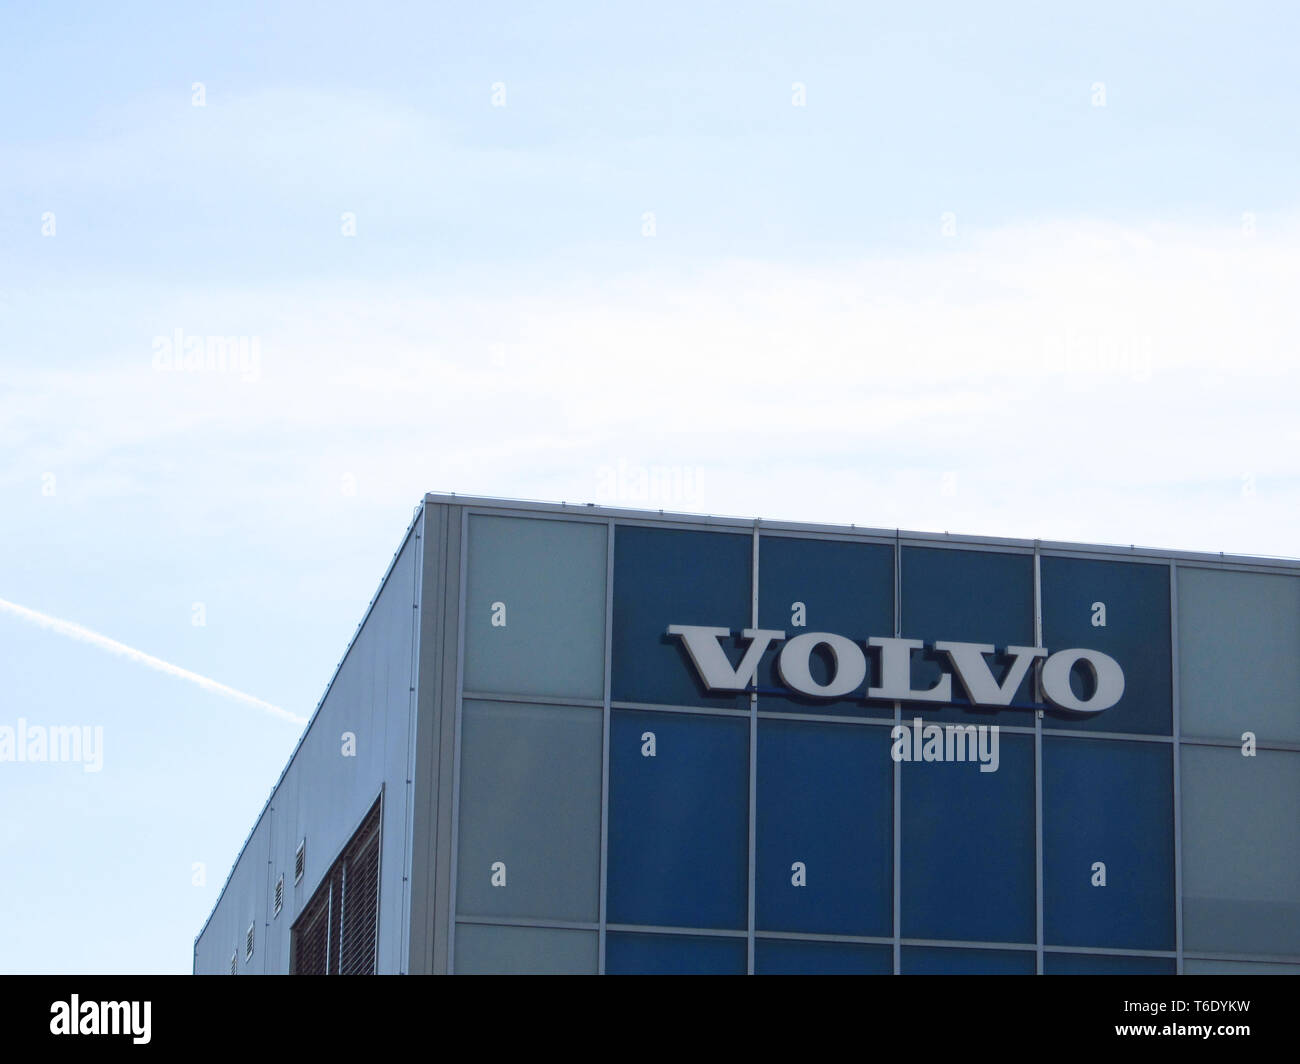 LJUBLJANA, SLOVENIA - MARCH 22 2019: Volvo is a Swedish multinational automaker company headquartered in Gothenburg, Sweden Stock Photo